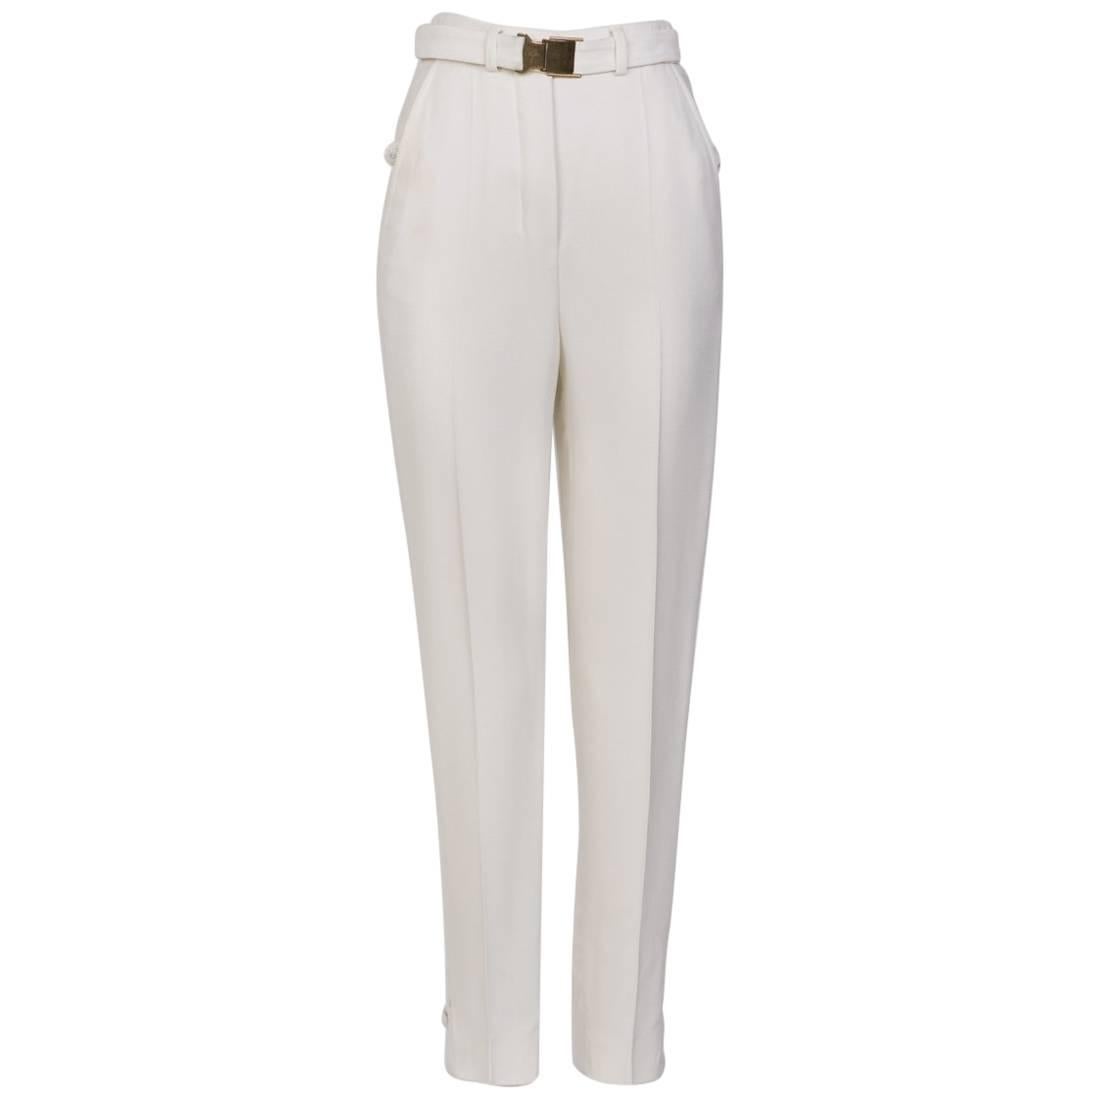 STEFANO PILATI For YSL White Crepe Trouser For Sale